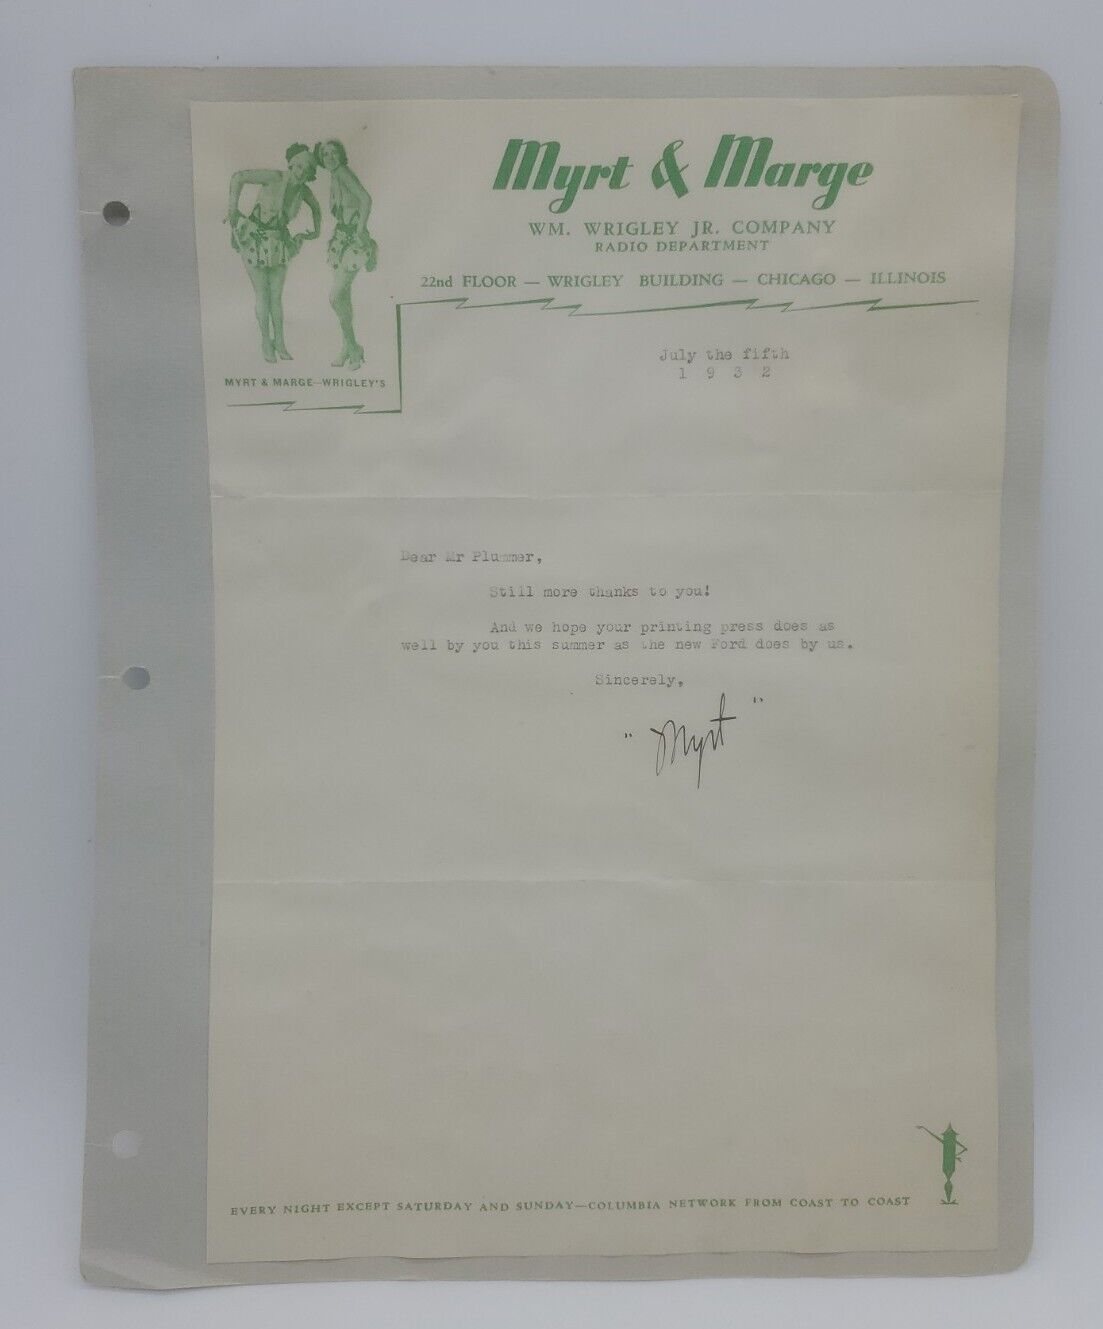 Vintage WRIGLEY\'S Myrt & Marge Radio Department Letter 1932